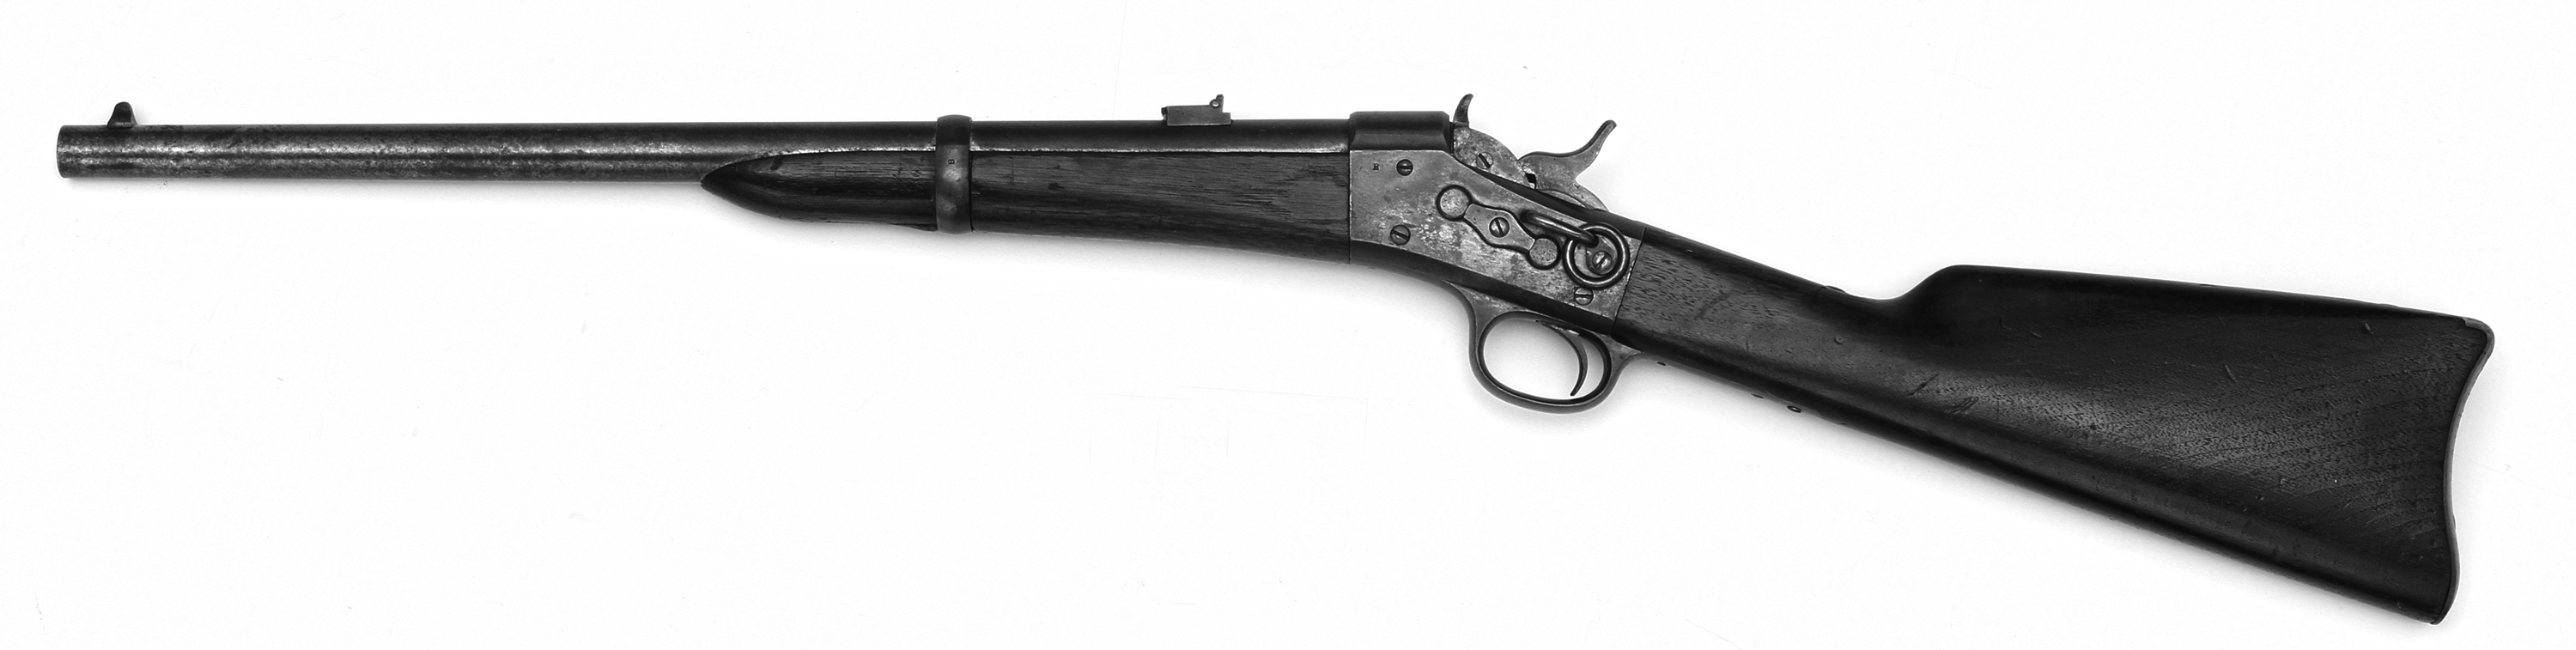 Spanish Model Carbine